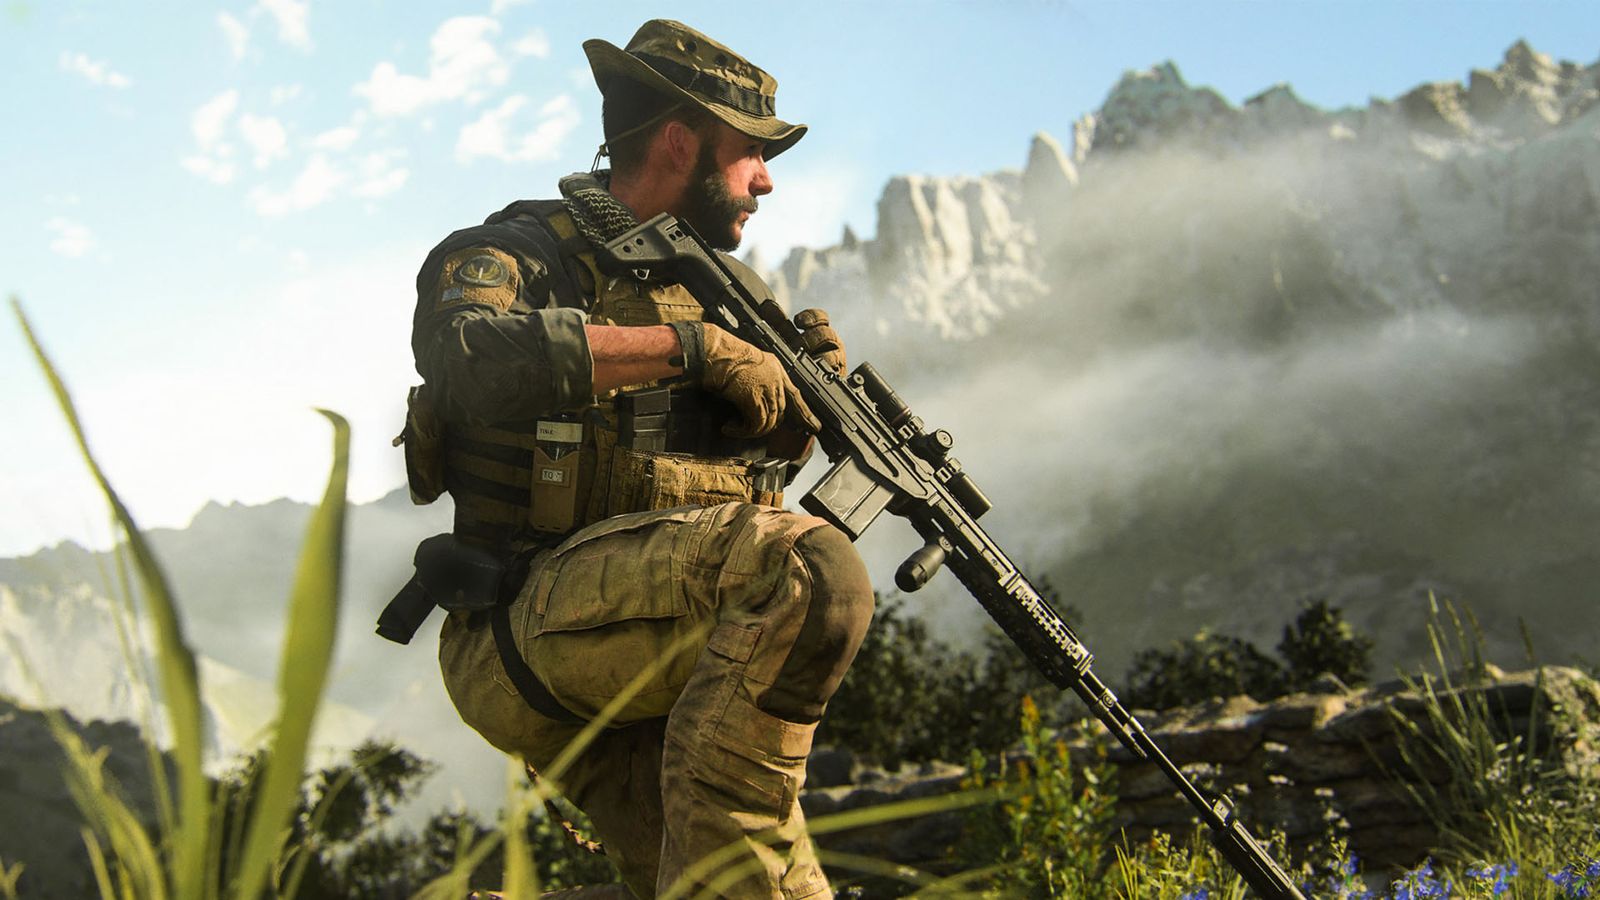 Modern Warfare 3 captain price crouching while holding green rifle